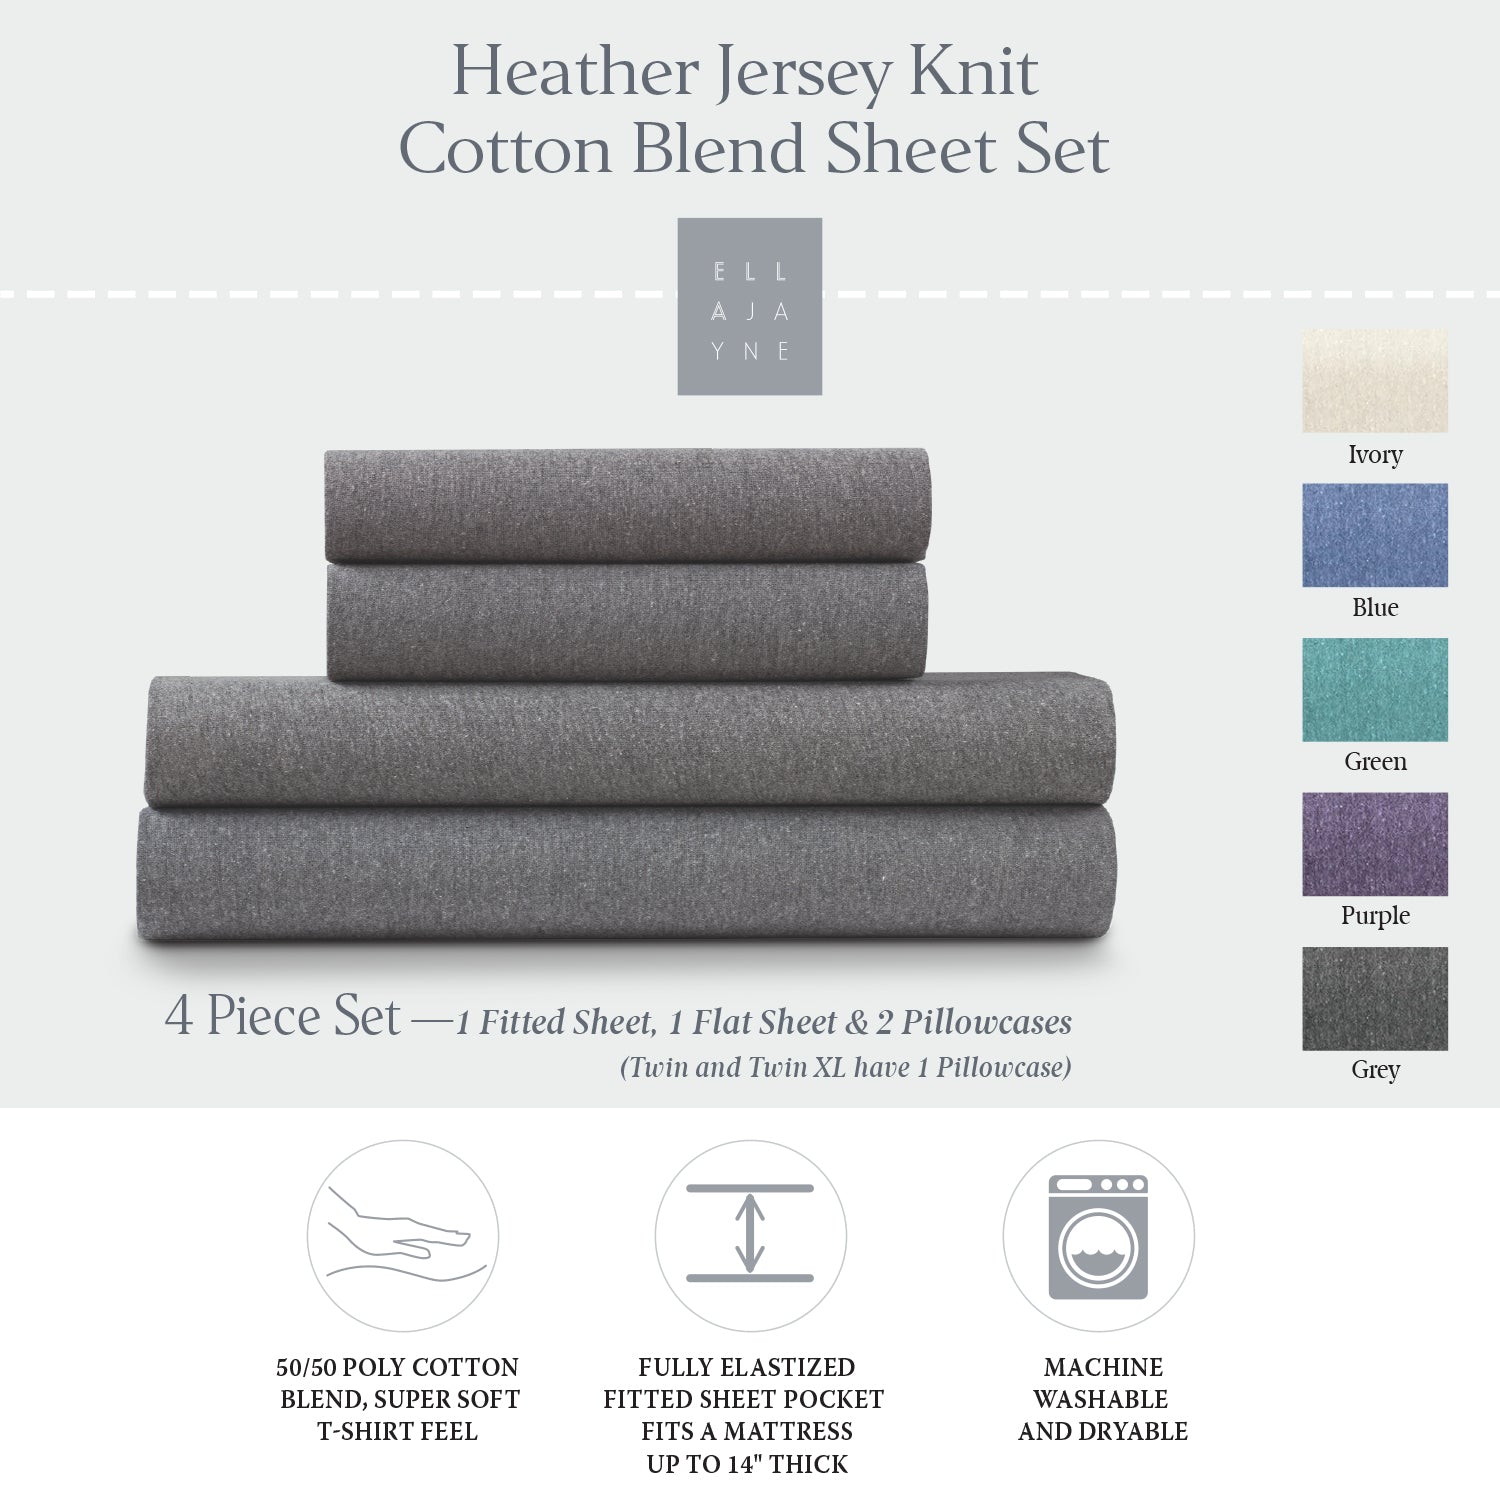 Heather Jersey Knit Cotton Blend Sheet Set